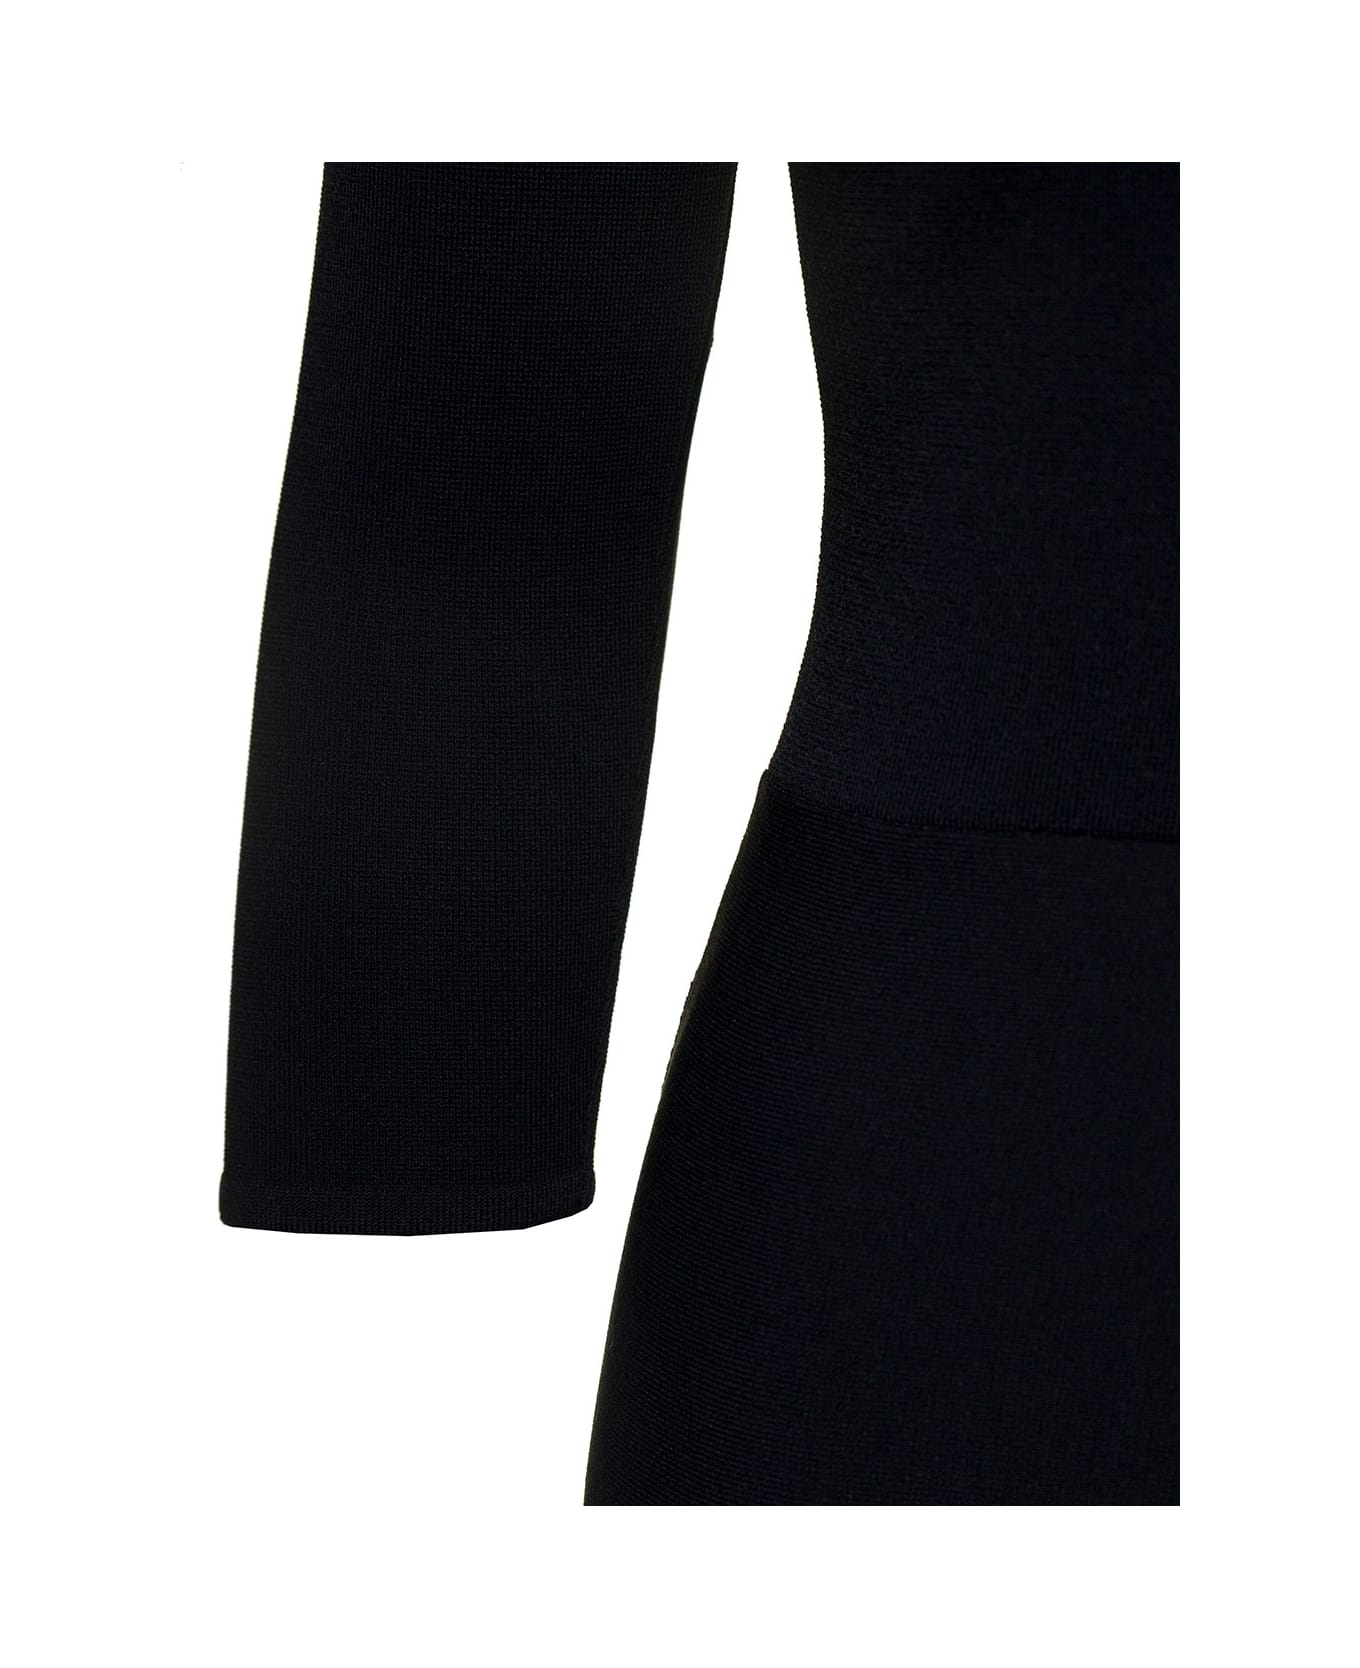 Stella McCartney Black Midi Knit Dress With Flare Skirt In Viscose Blend Woman - Black